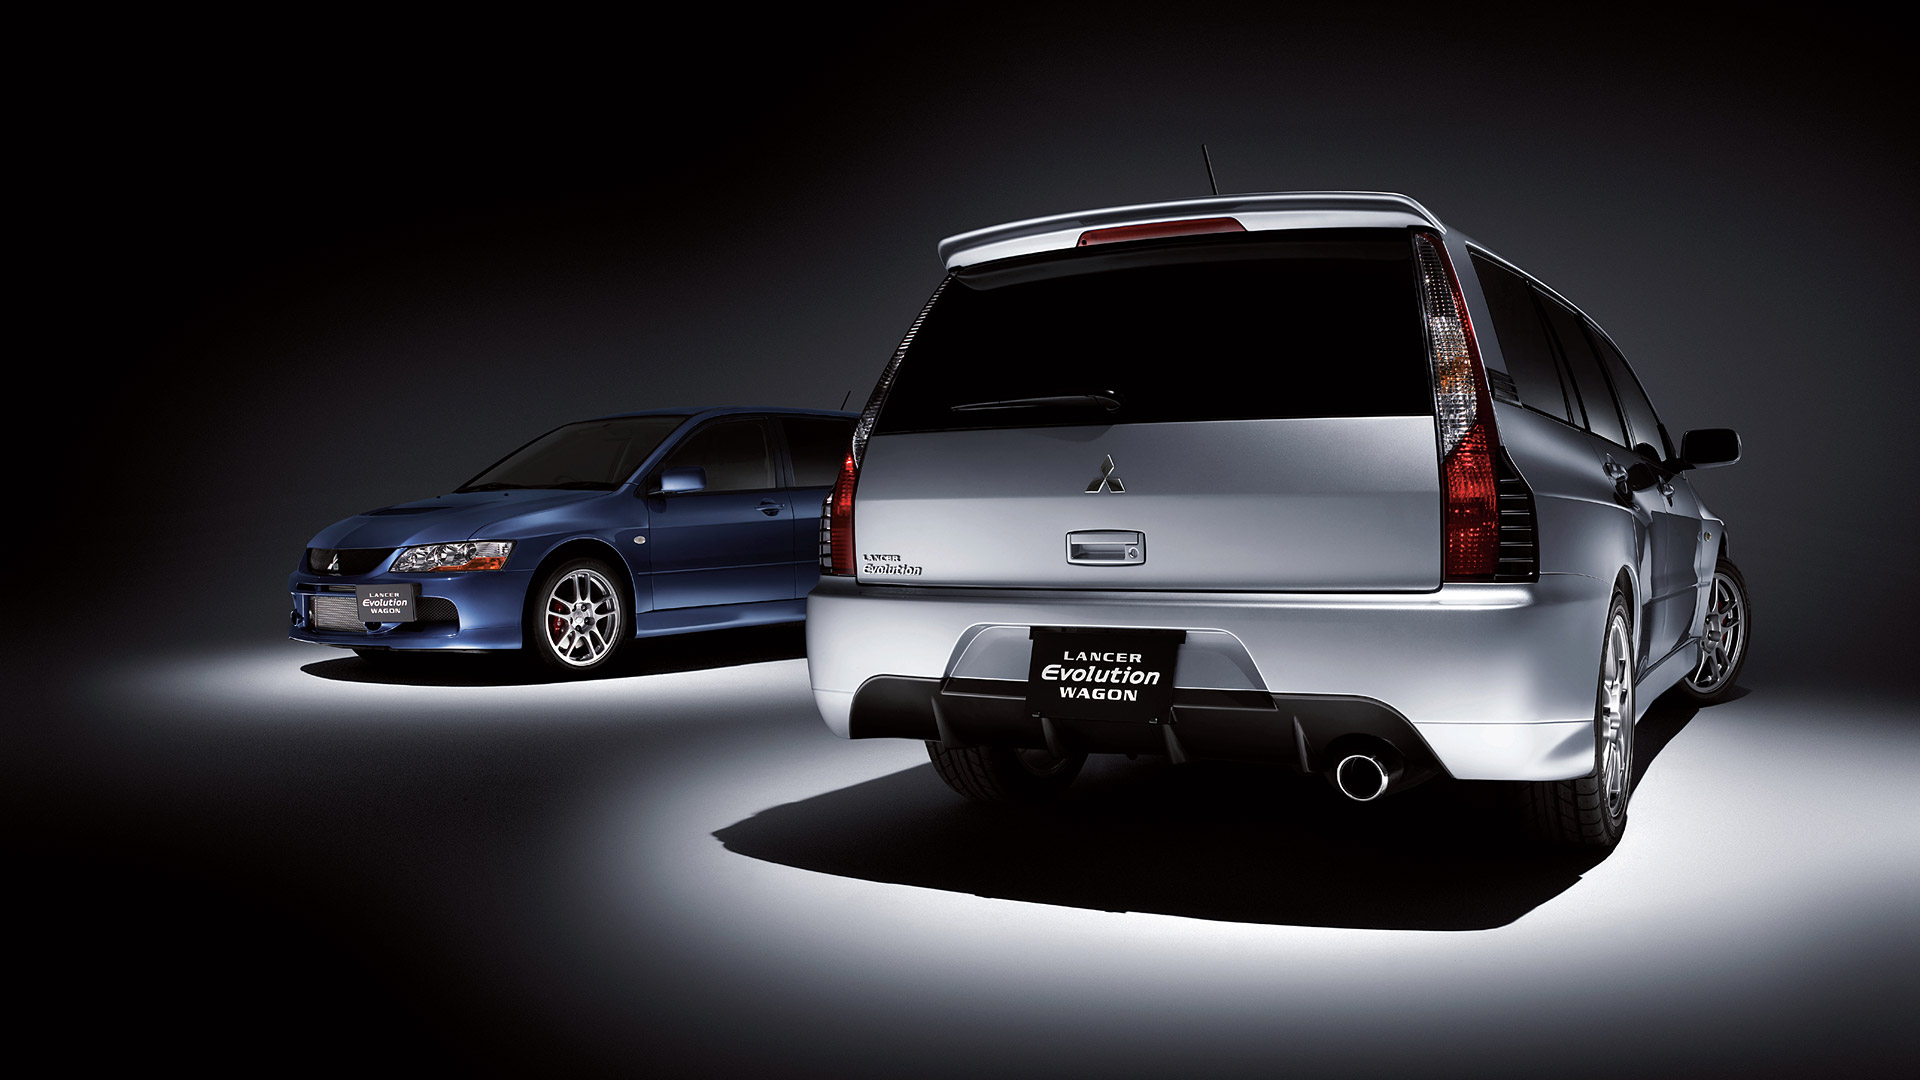  2005 Mitsubishi Lancer Evolution IX Wagon Wallpaper.